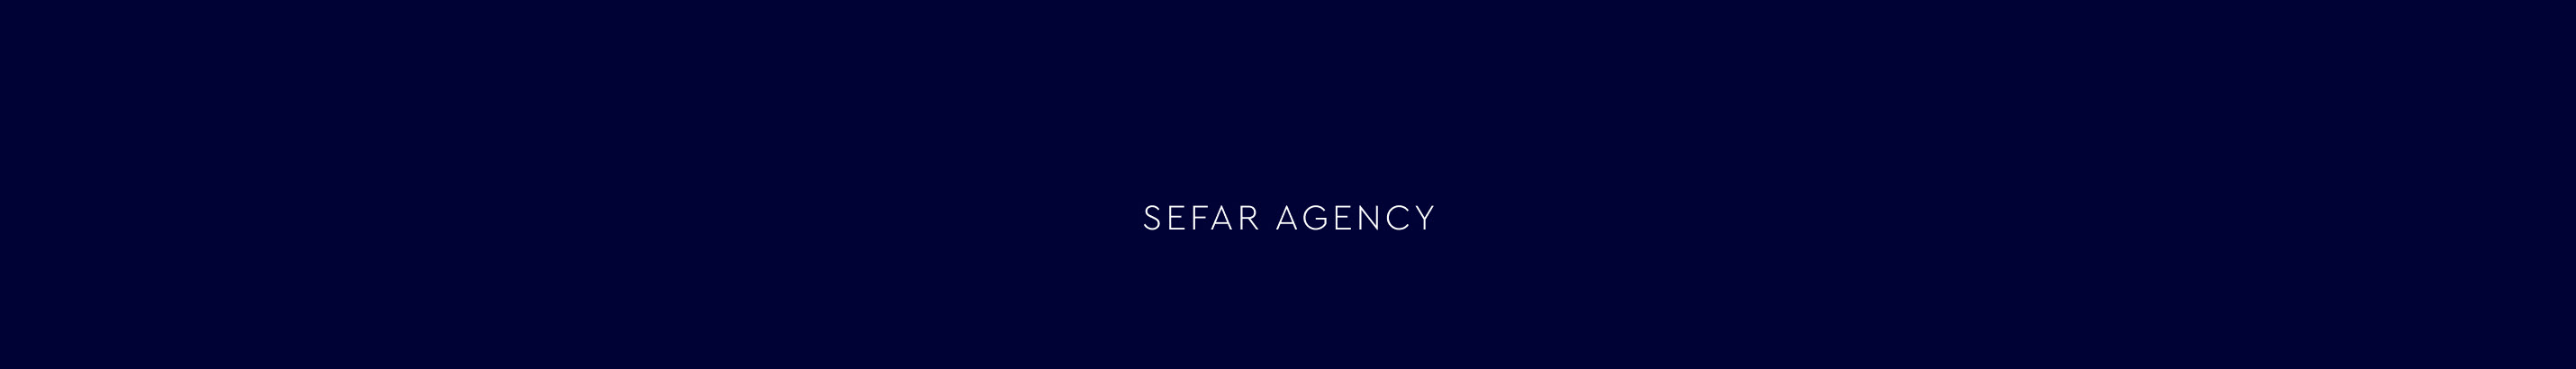 Sefar Agency's profile banner